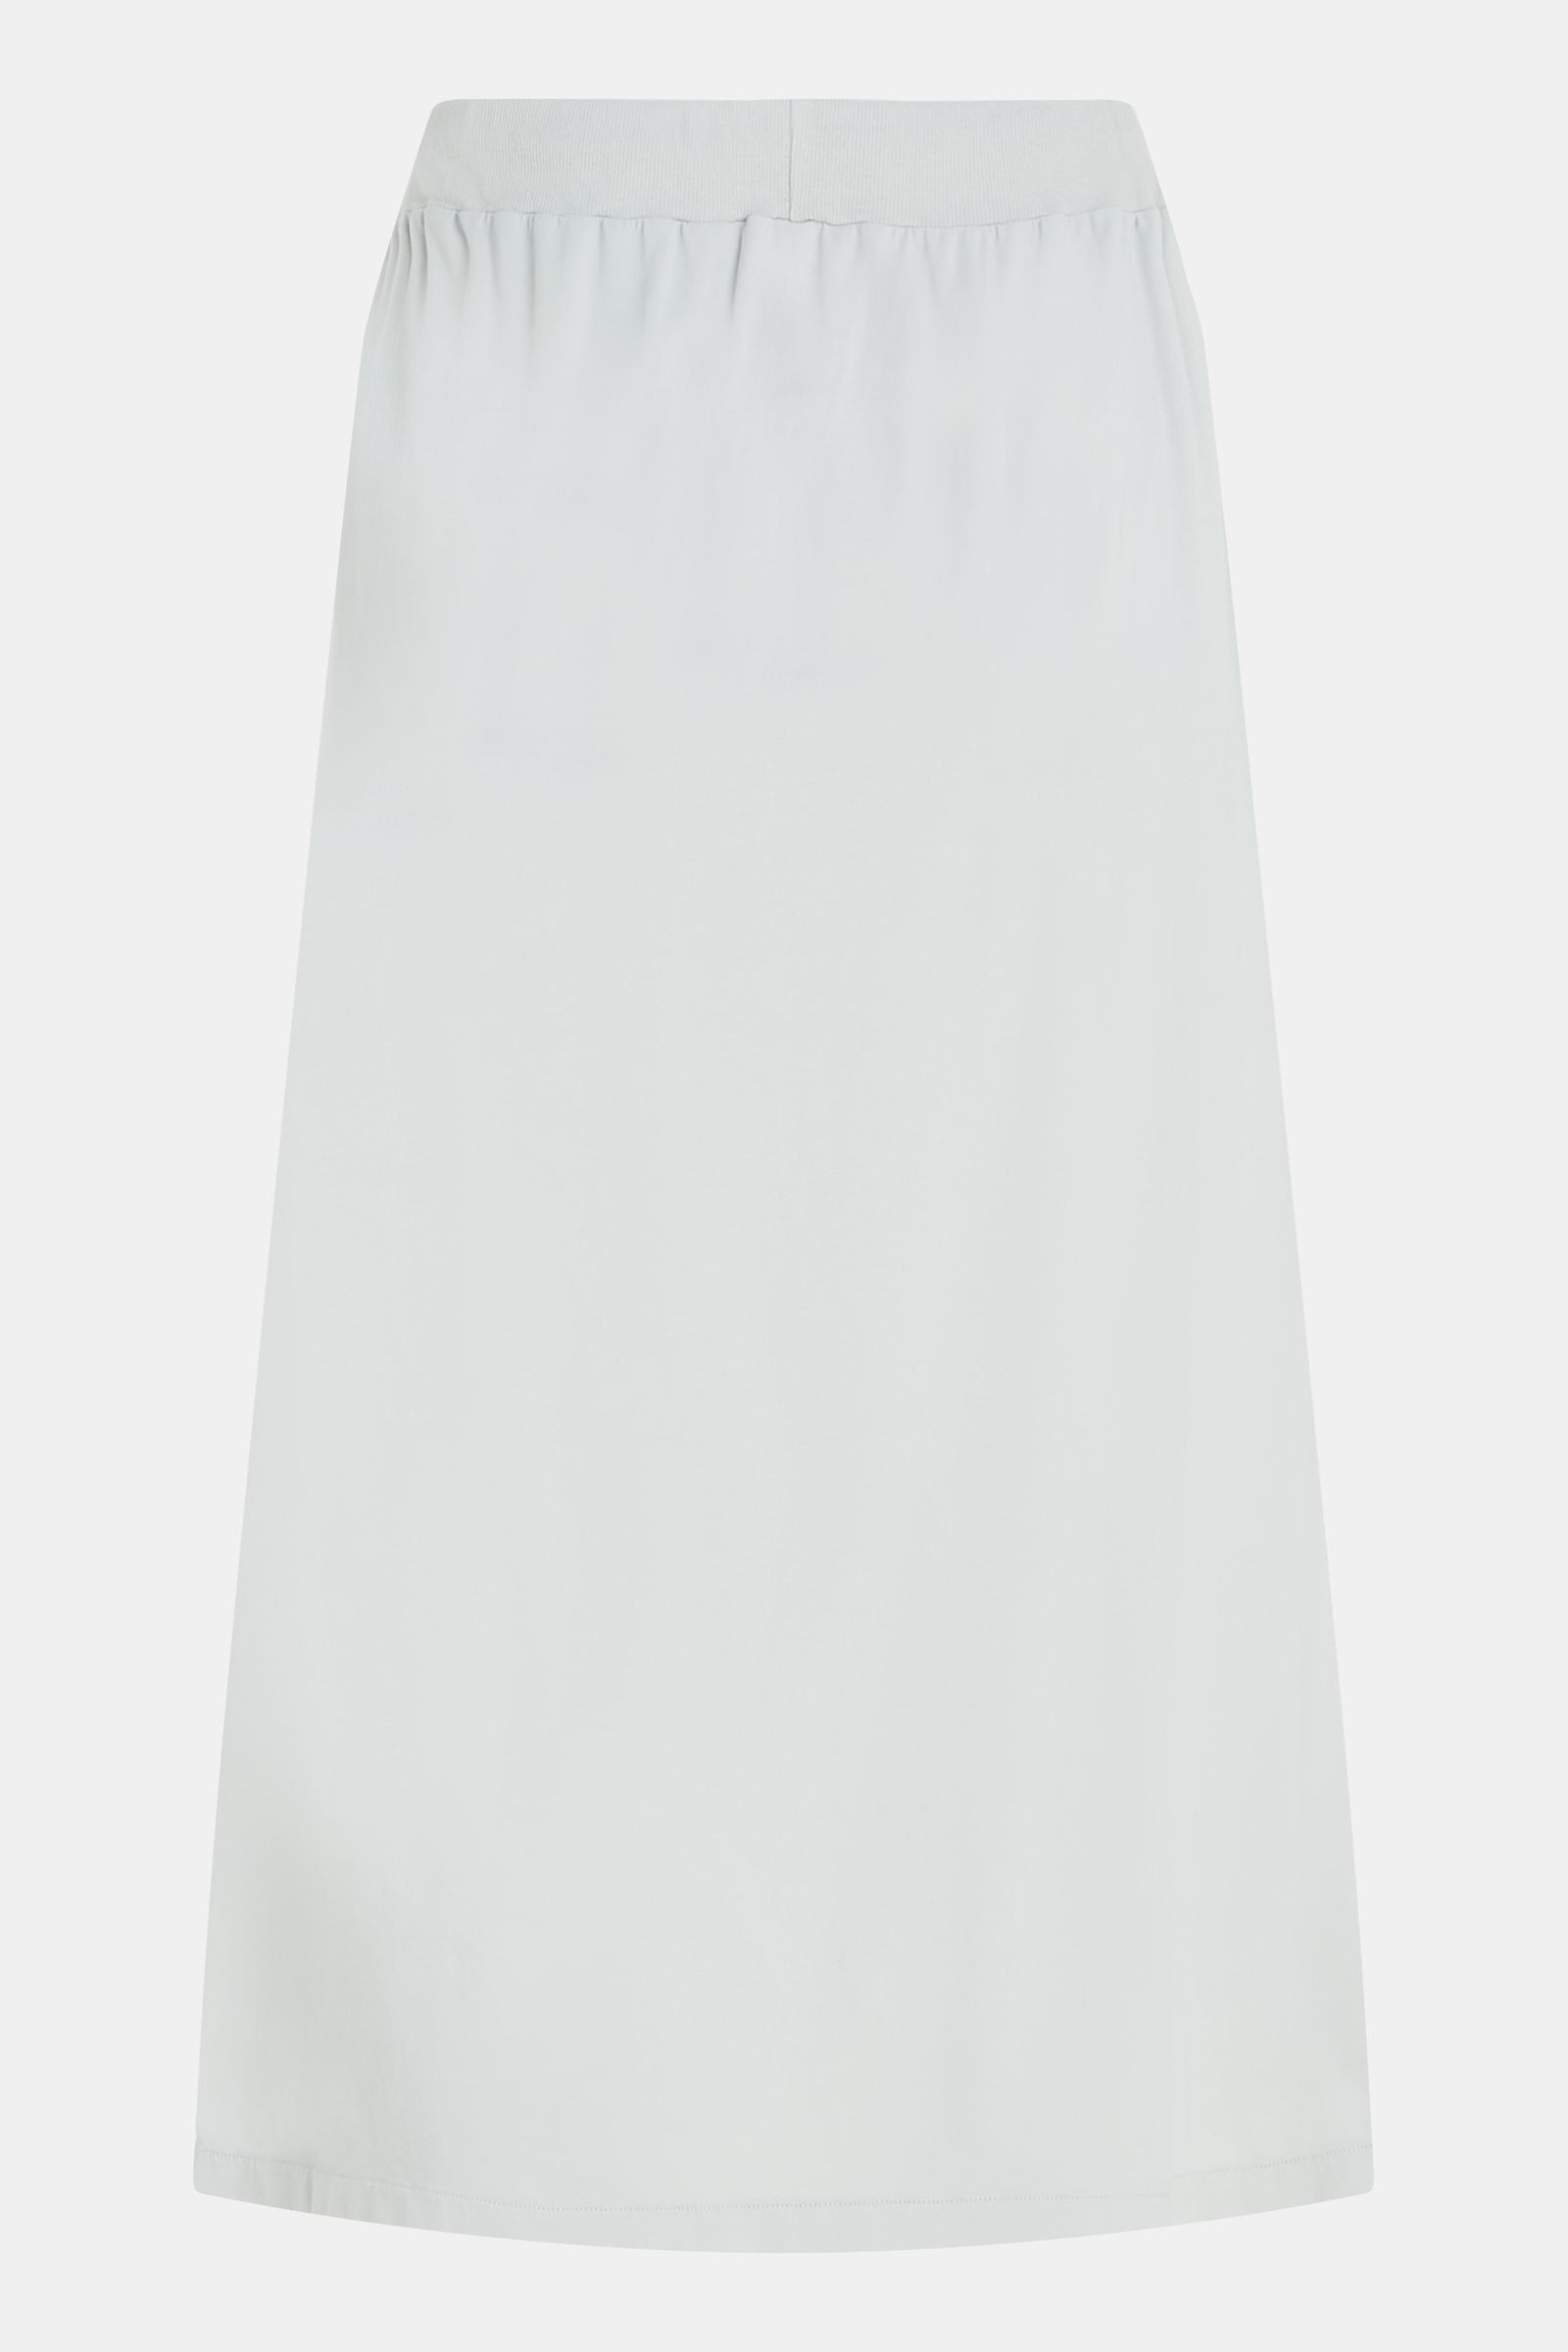 White Cotton Basic Low Rise Micro Mini Skirt | PrettyLittleThing USA